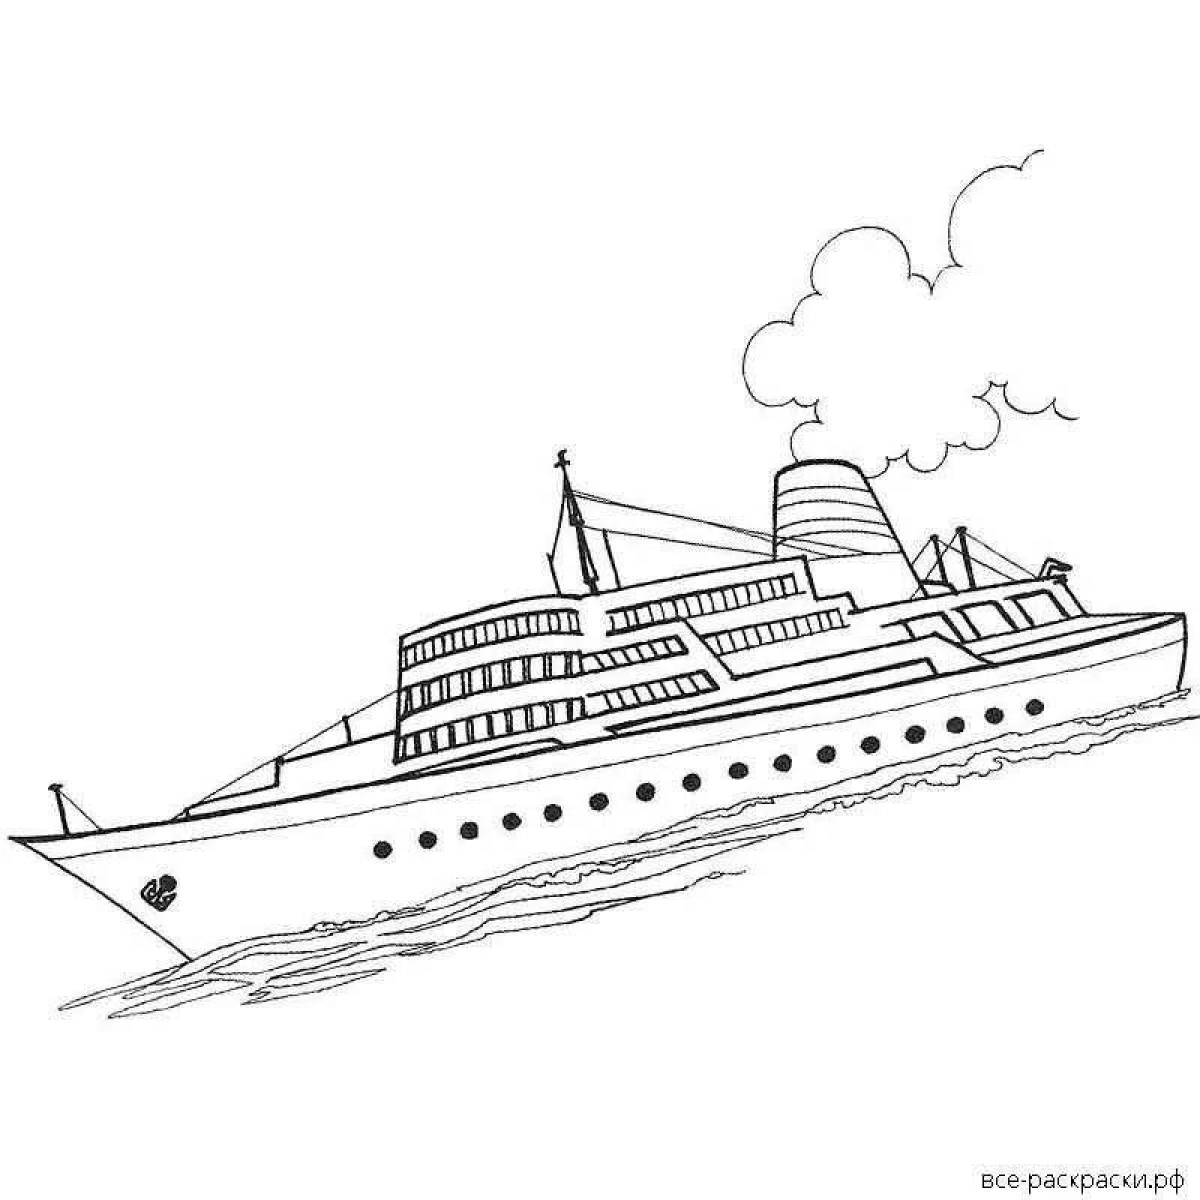 Glamorous cruise ship coloring page